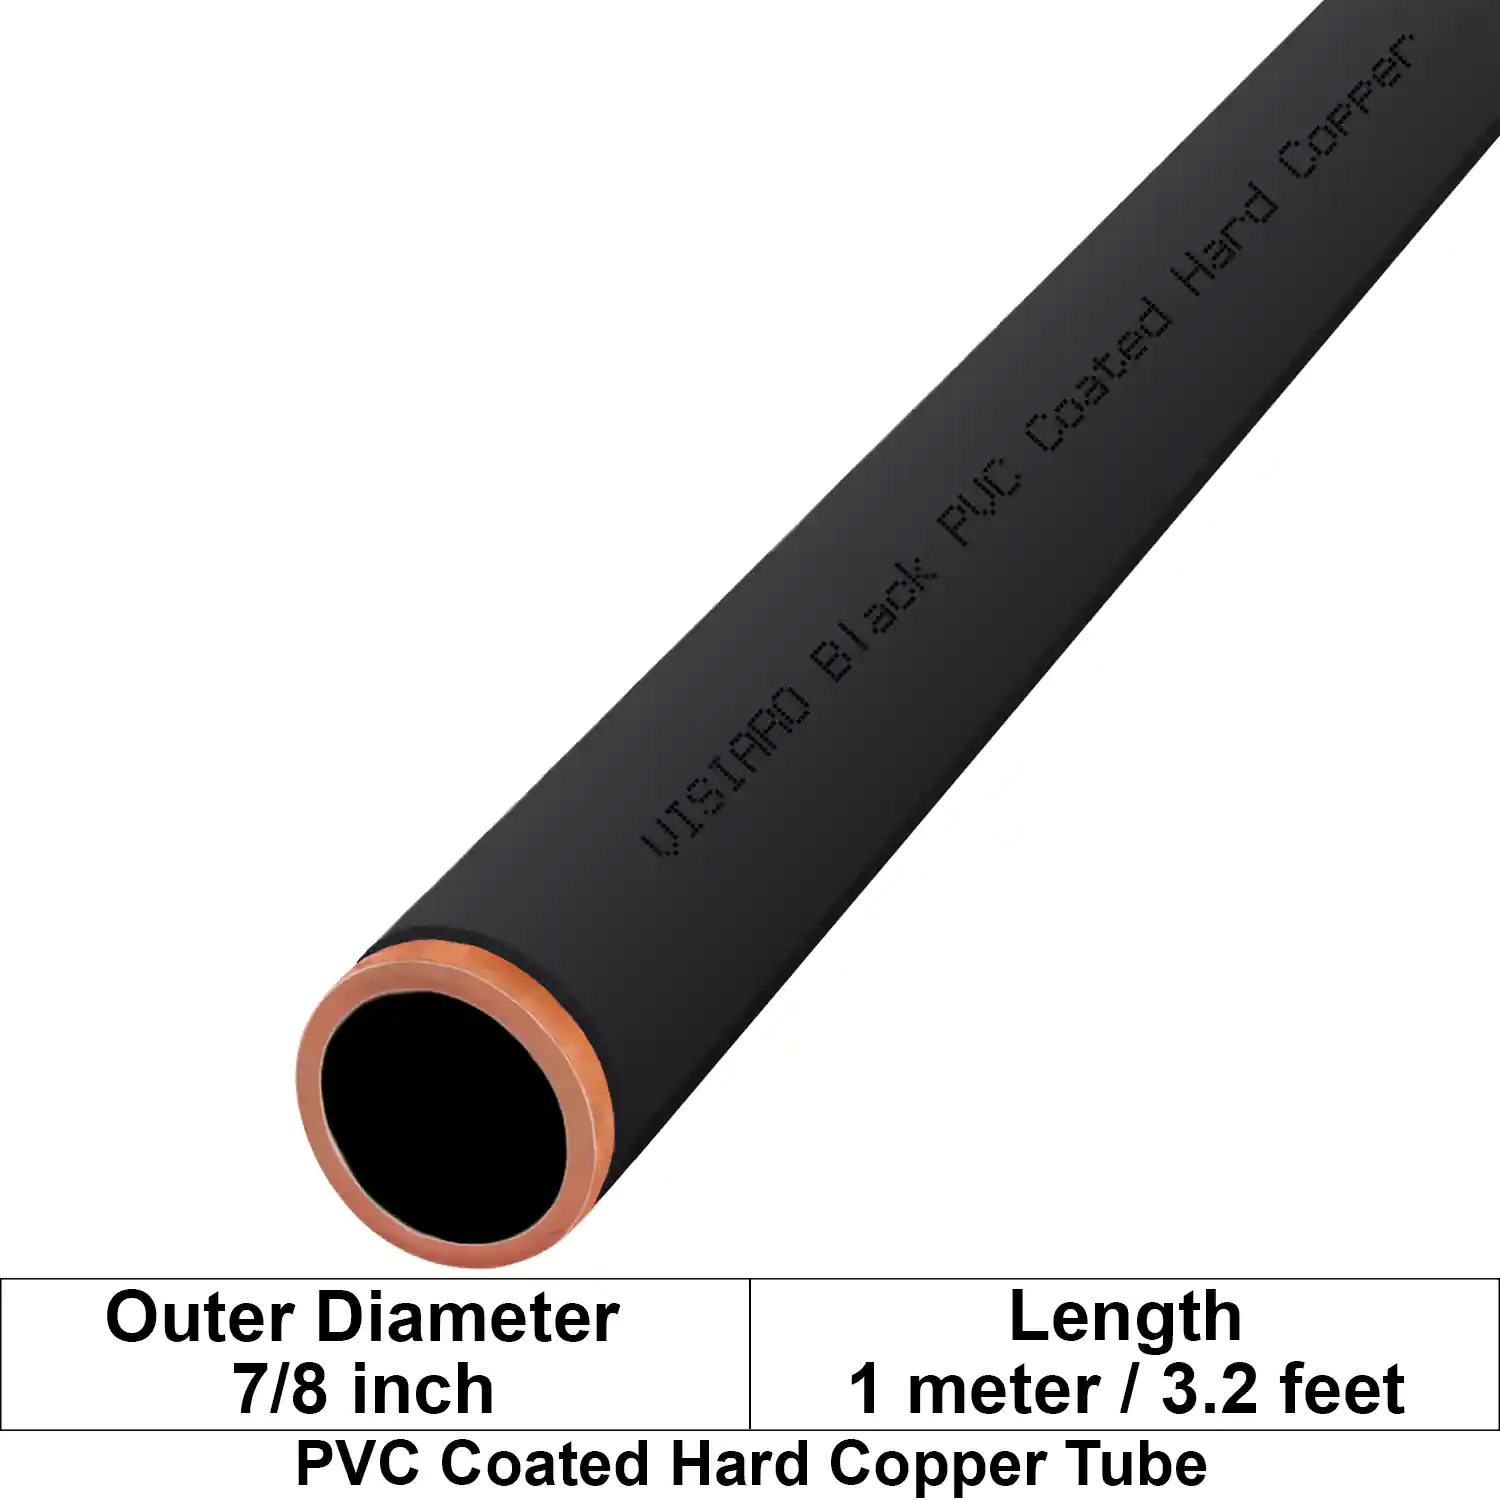 Visiaro Black PVC Coated Hard Copper Tube 1mtr long Outer Diameter - 7/8 inch